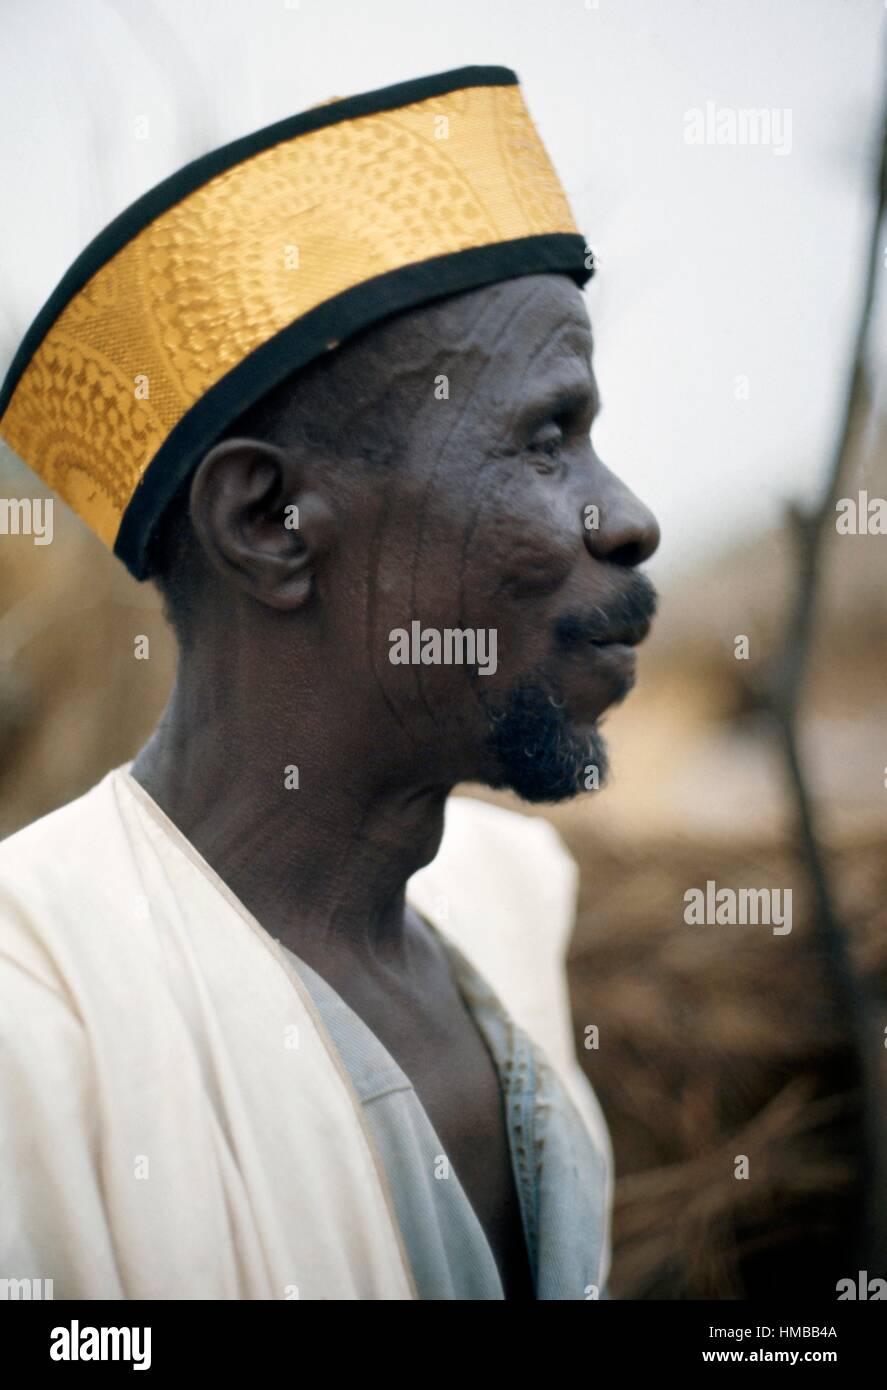 Village chief wearing a headdress, Burkina Faso. Stock Photo